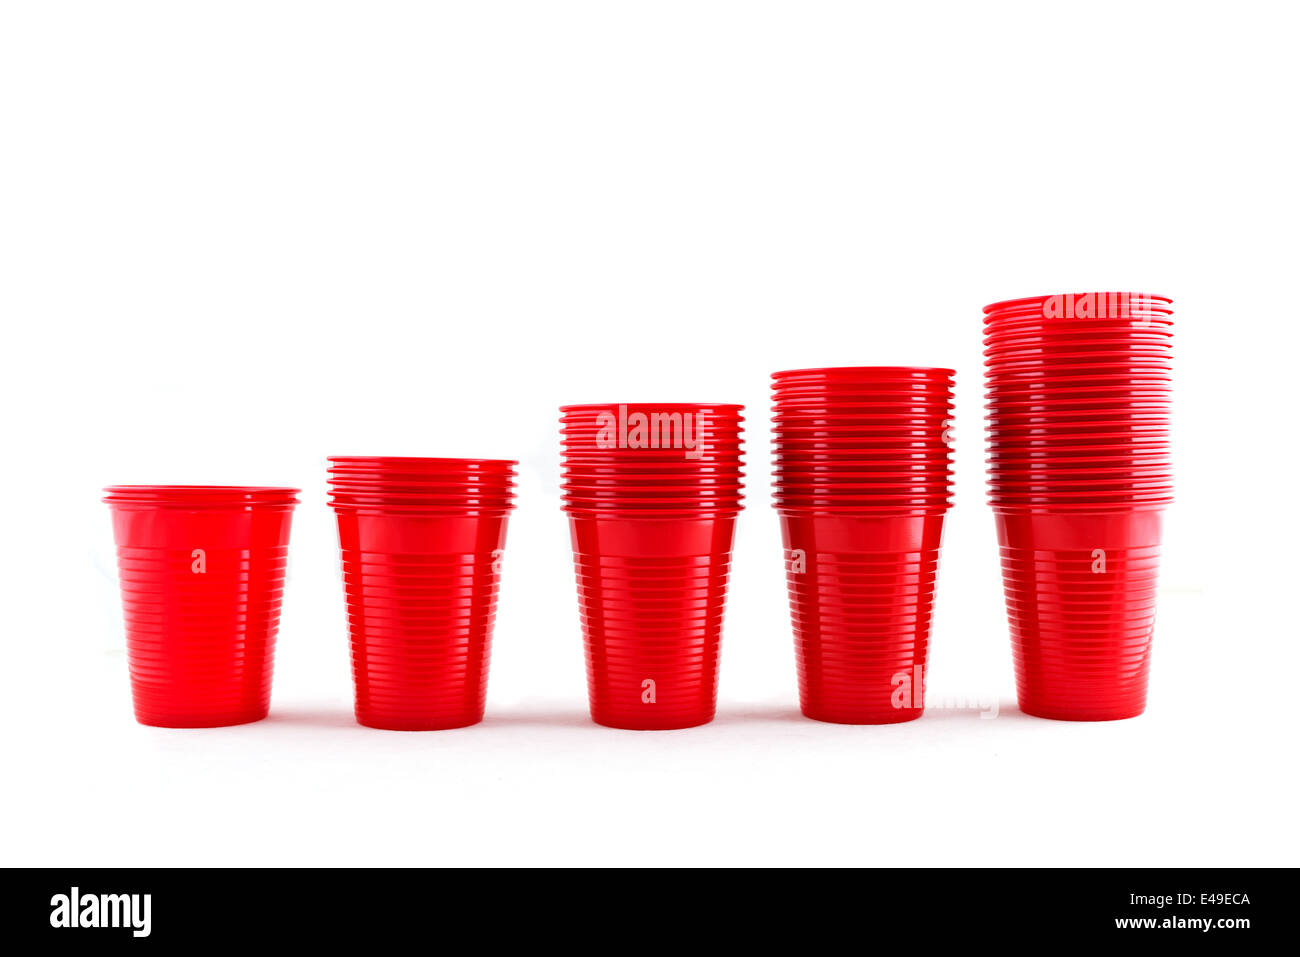 https://c8.alamy.com/comp/E49ECA/plastic-red-cups-stacks-isolated-on-white-background-E49ECA.jpg